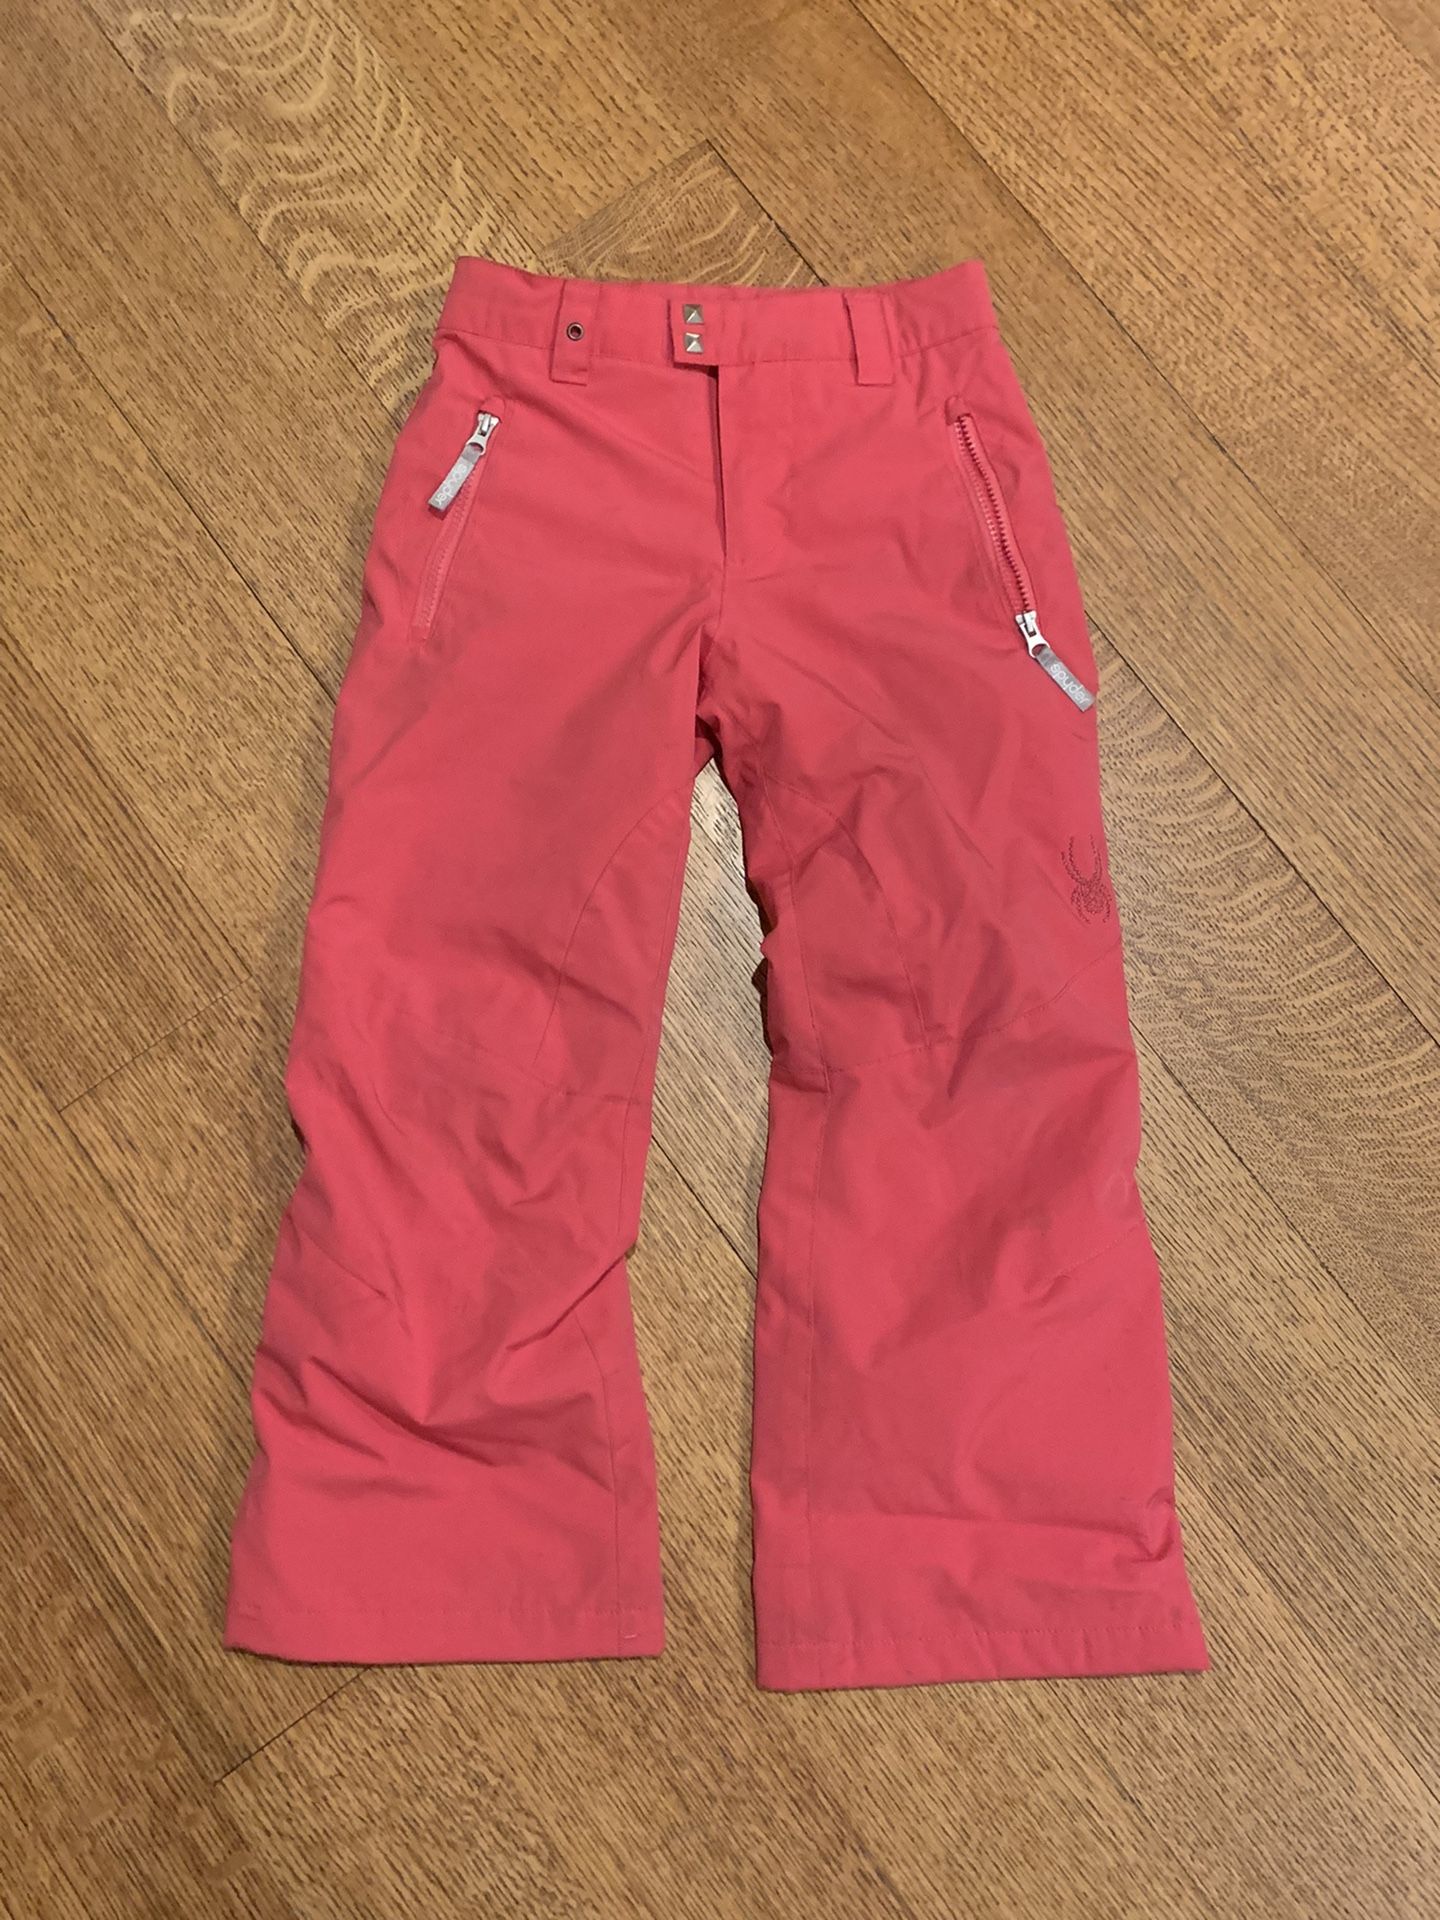 Girls Pink Spyder Snow pants size 8